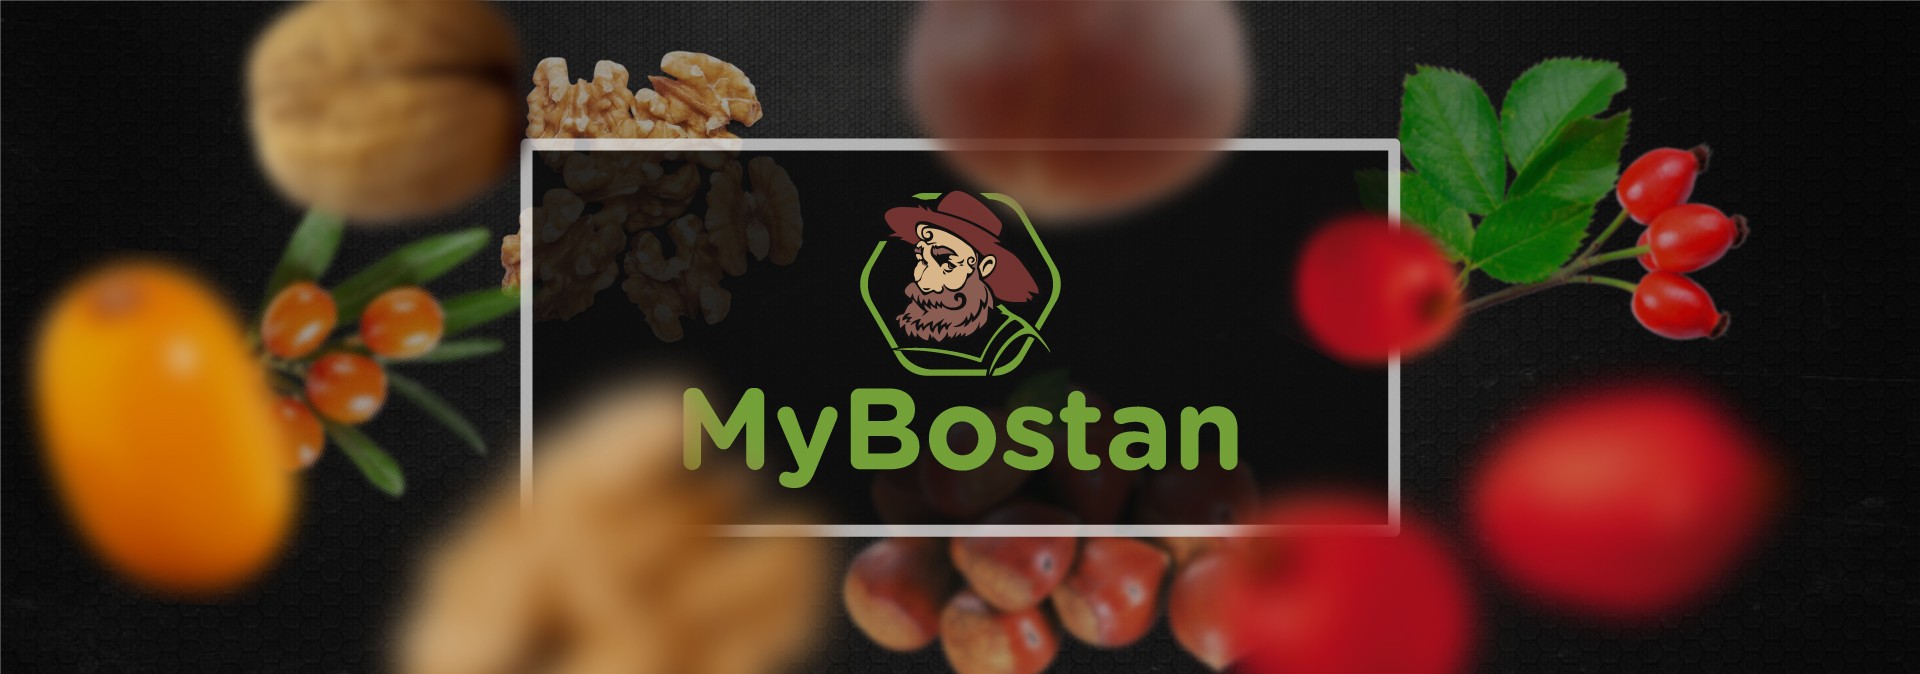 MyBostan - Fresh Store | LinkedIn